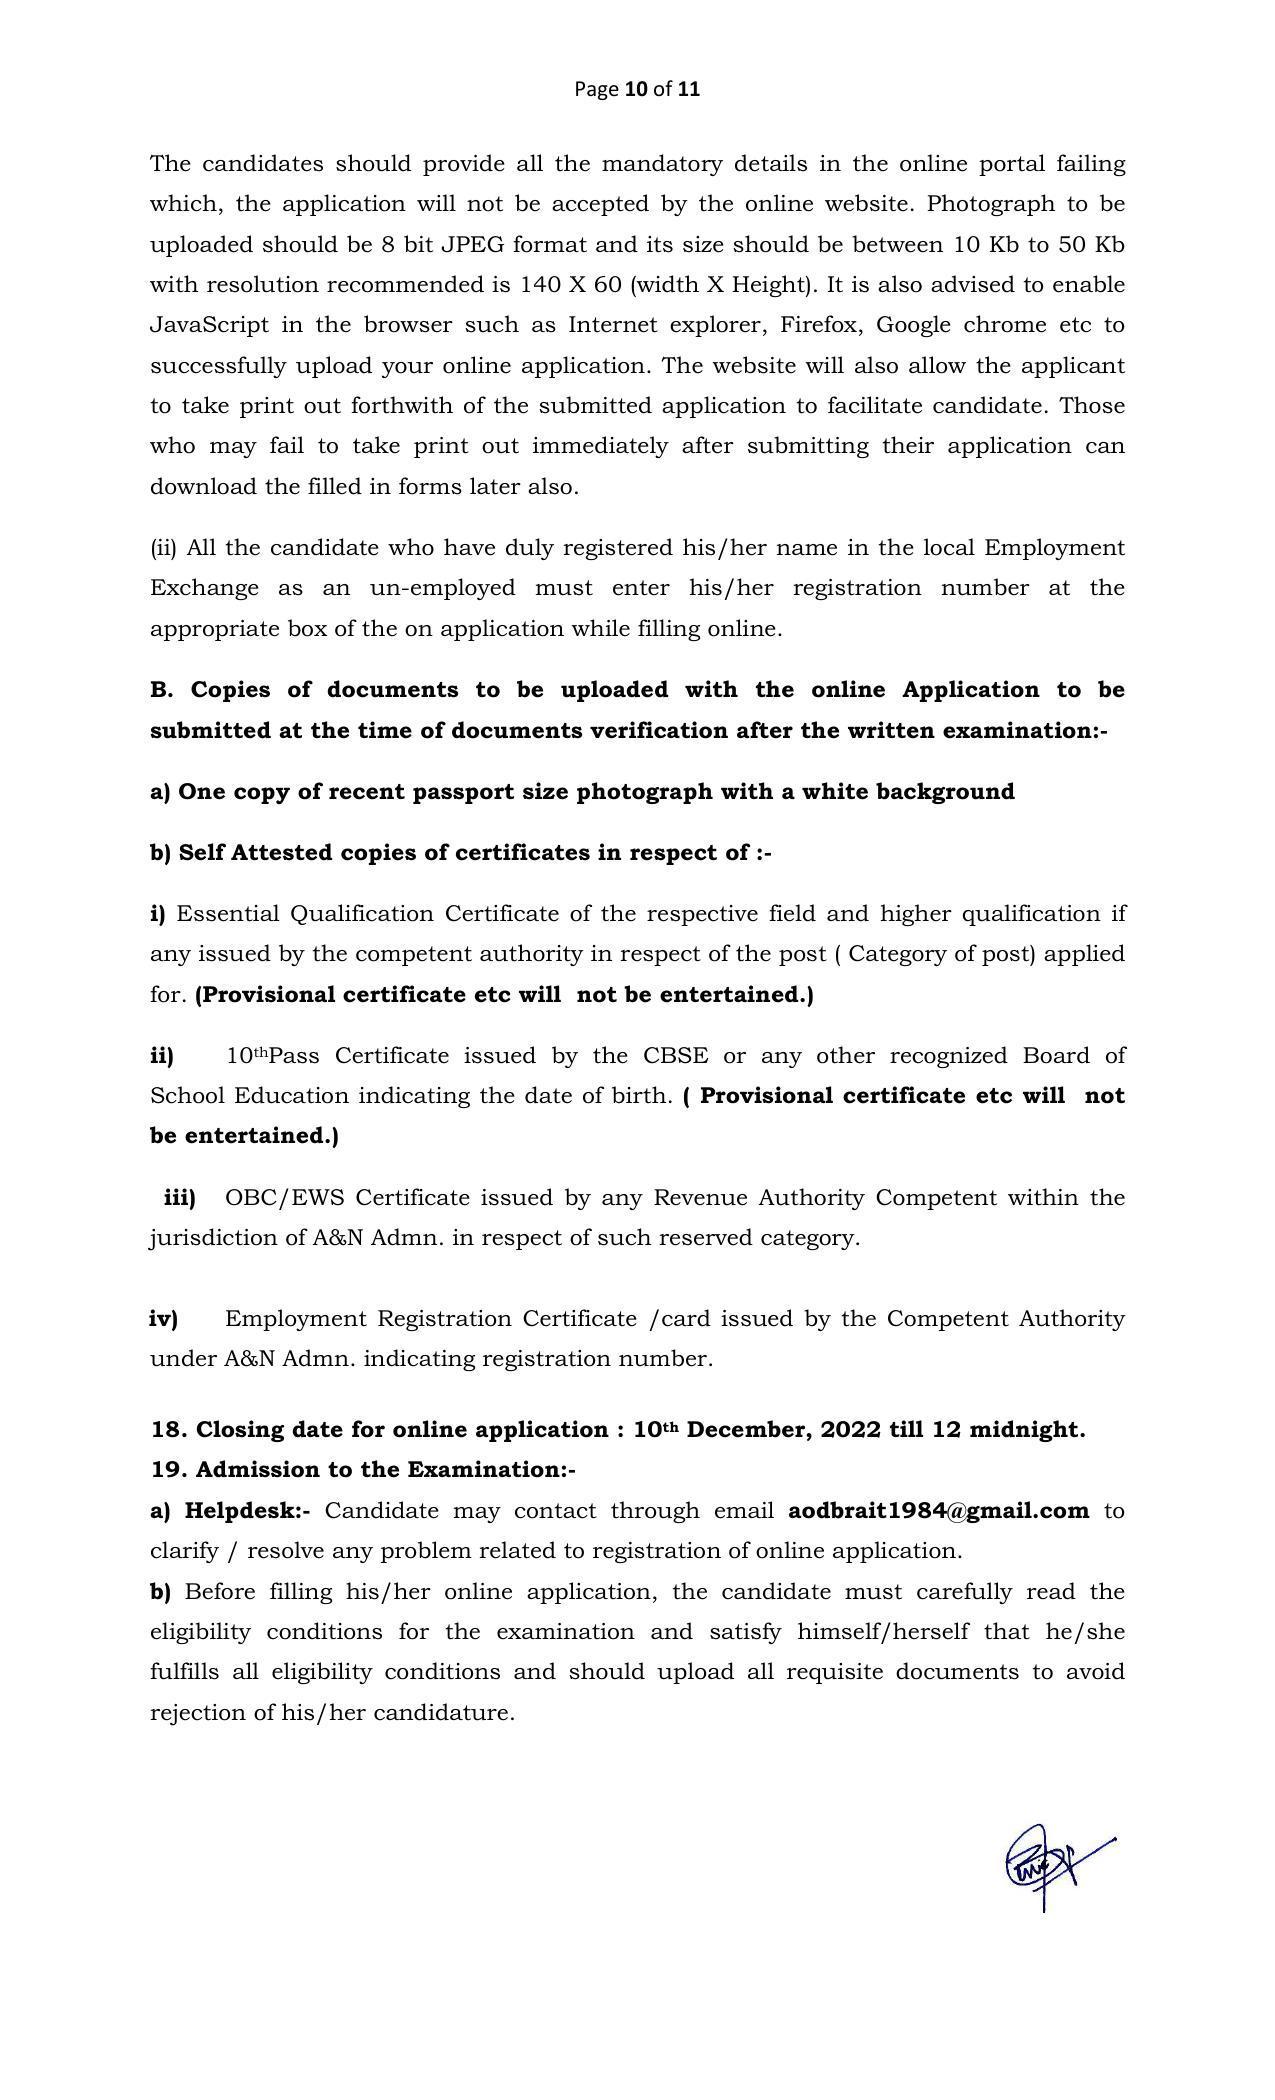 Andaman & Nicobar Administration Invites Application for 8 Cook, Mali, More Vacancies Recruitment 2022 - Page 5